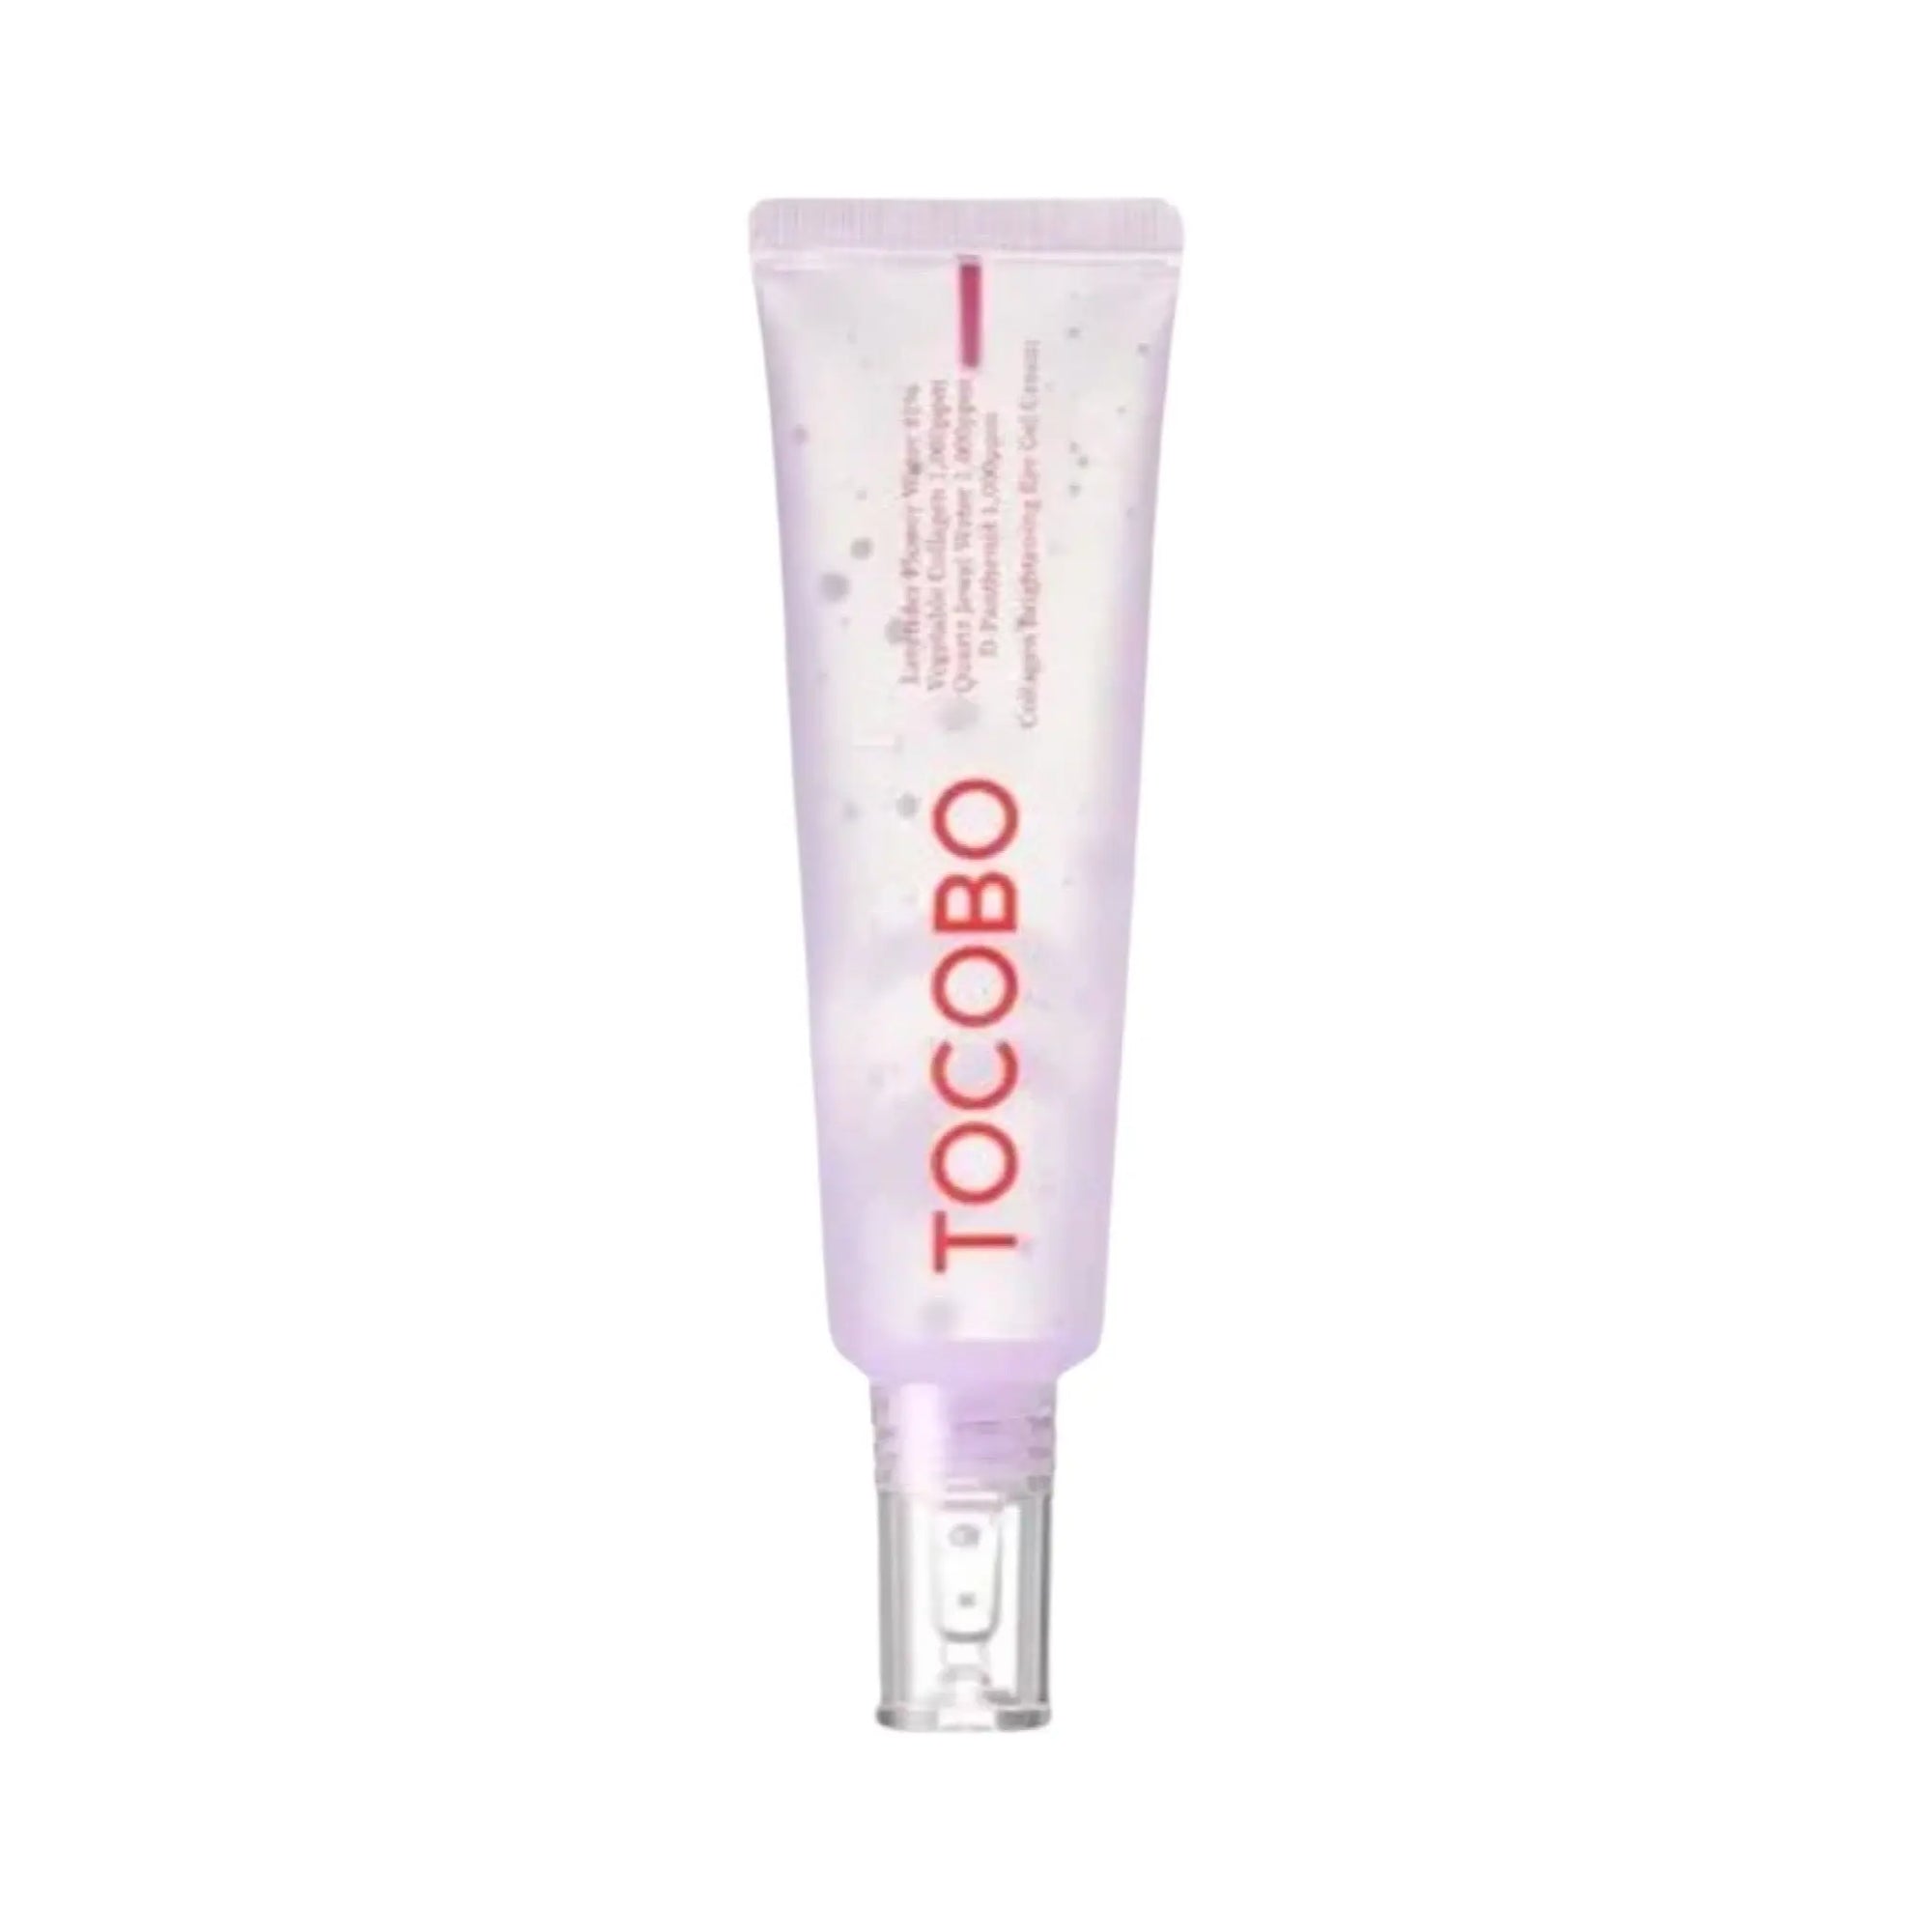 Tocobo - Collagen Brightening Eye Gel Cream 30mL Tocobo